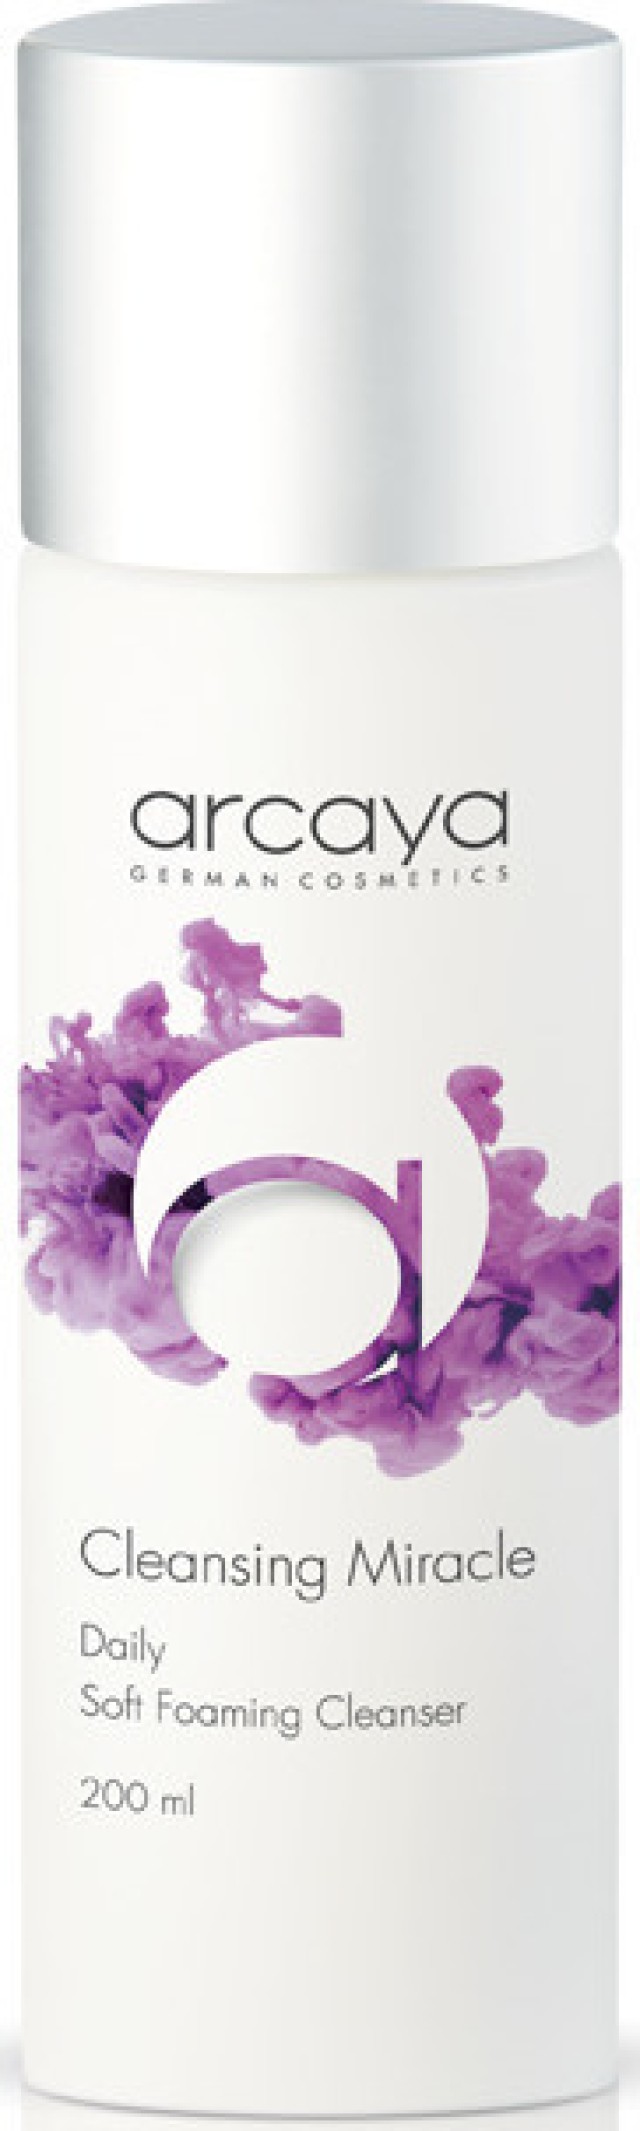 Arcaya Cleansing Miracle Daily Foaming Cleanser Gel Καθαρισμού Προσώπου 200ml